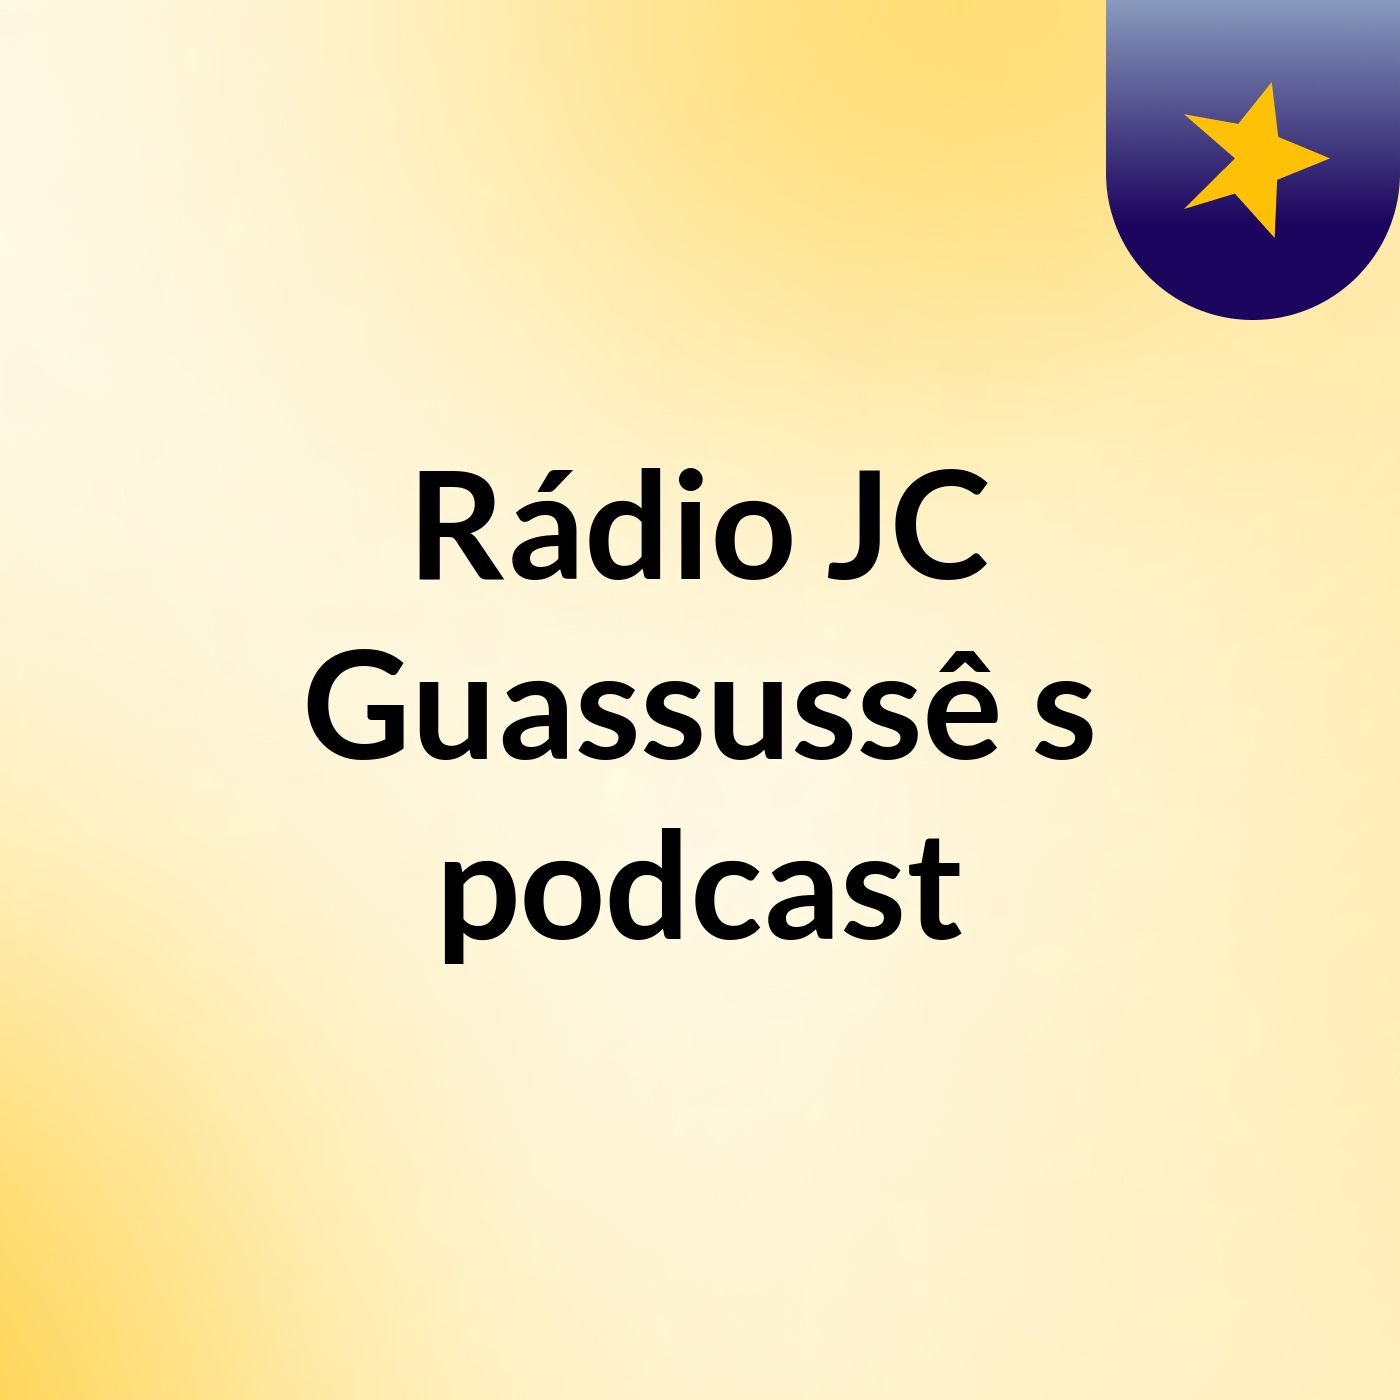 Rádio JC Guassussê's podcast